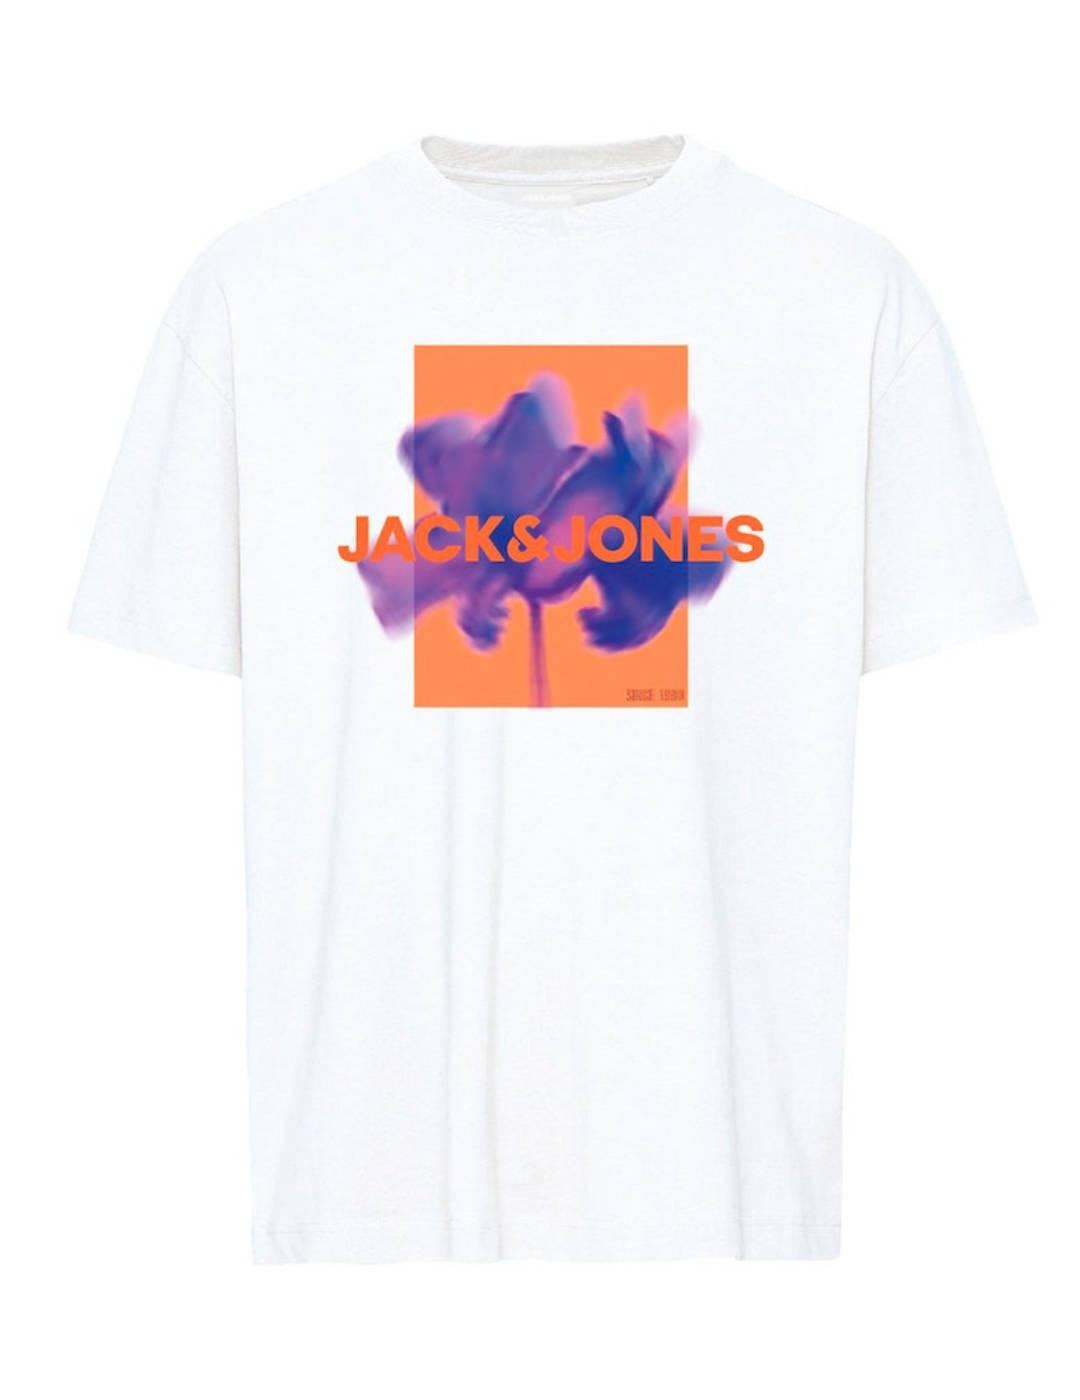 Camiseta Jack&Jones Florals blanco manga corta para hombre